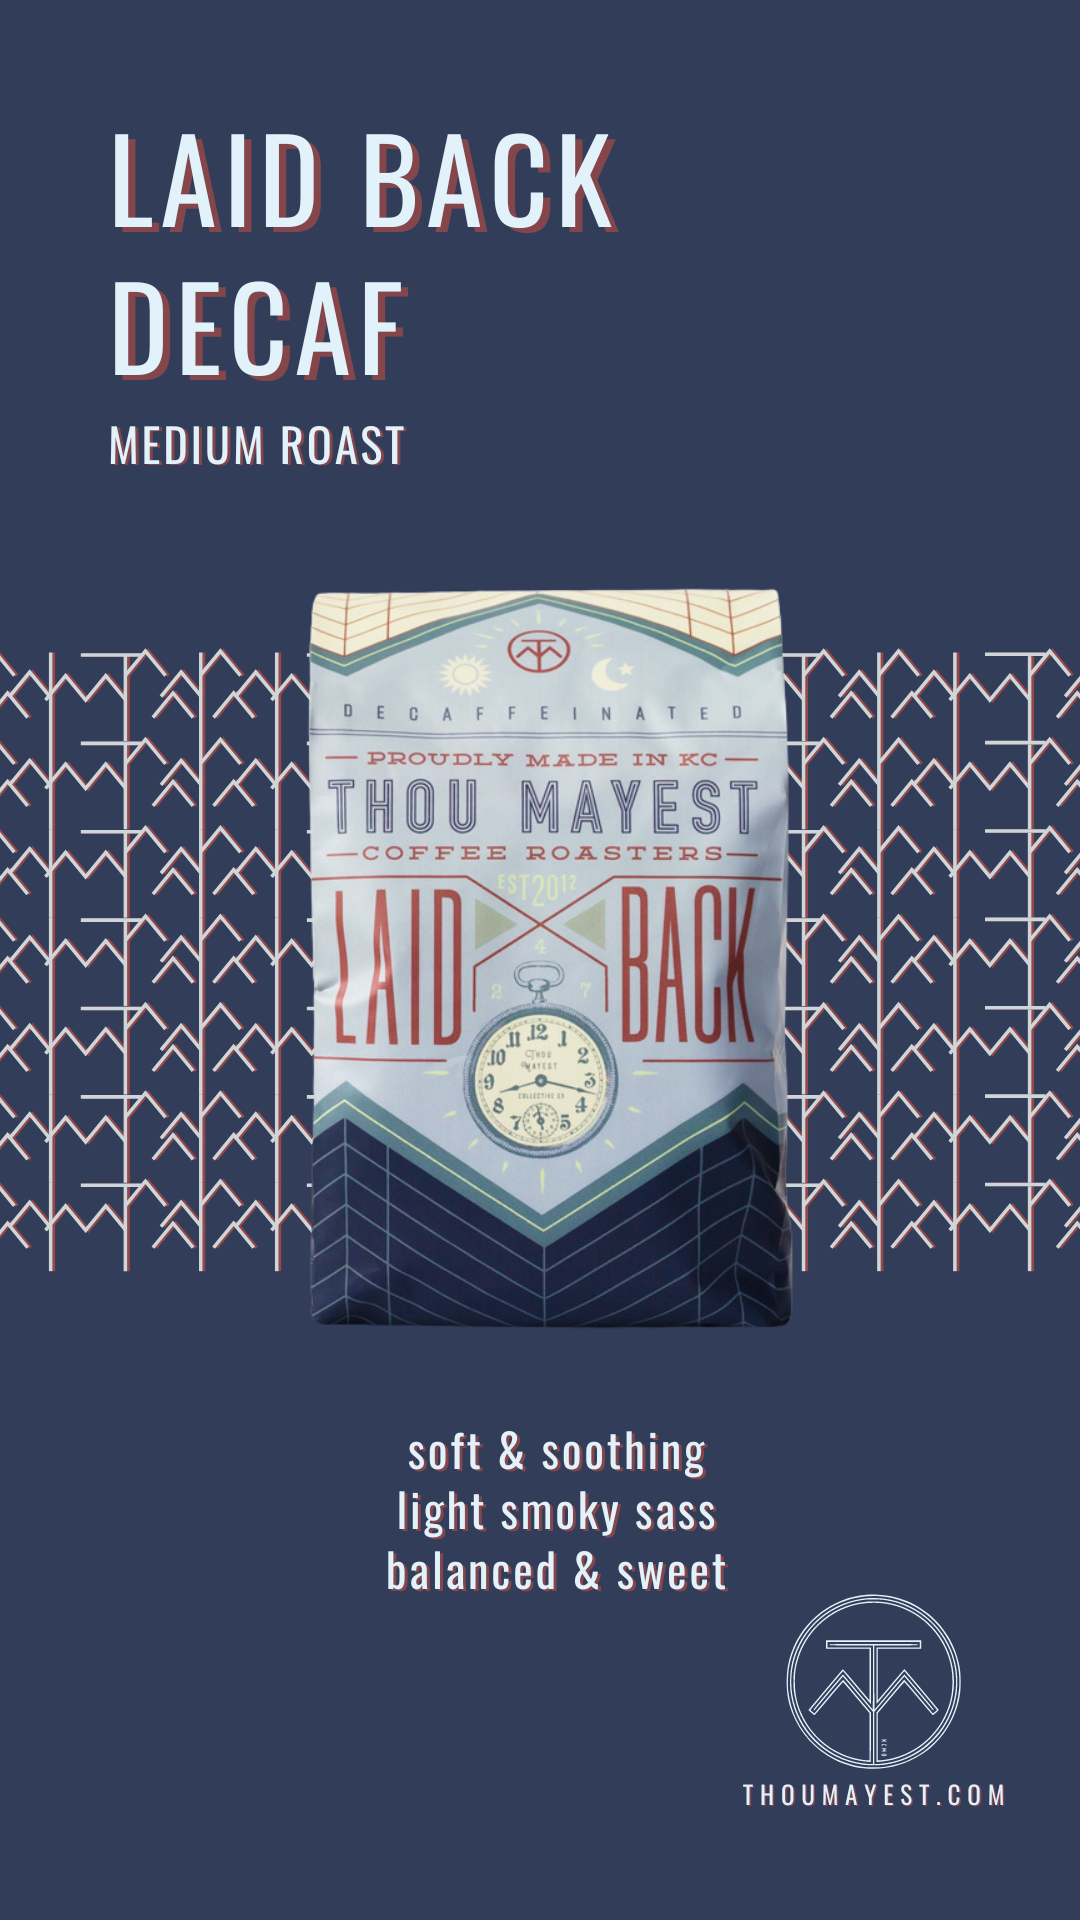 Image of Laid Back Decaf 12oz bag of coffee with description: Medium roast. Soft & Soothing. Light, Smoky Sass. Balanced & Sweet.